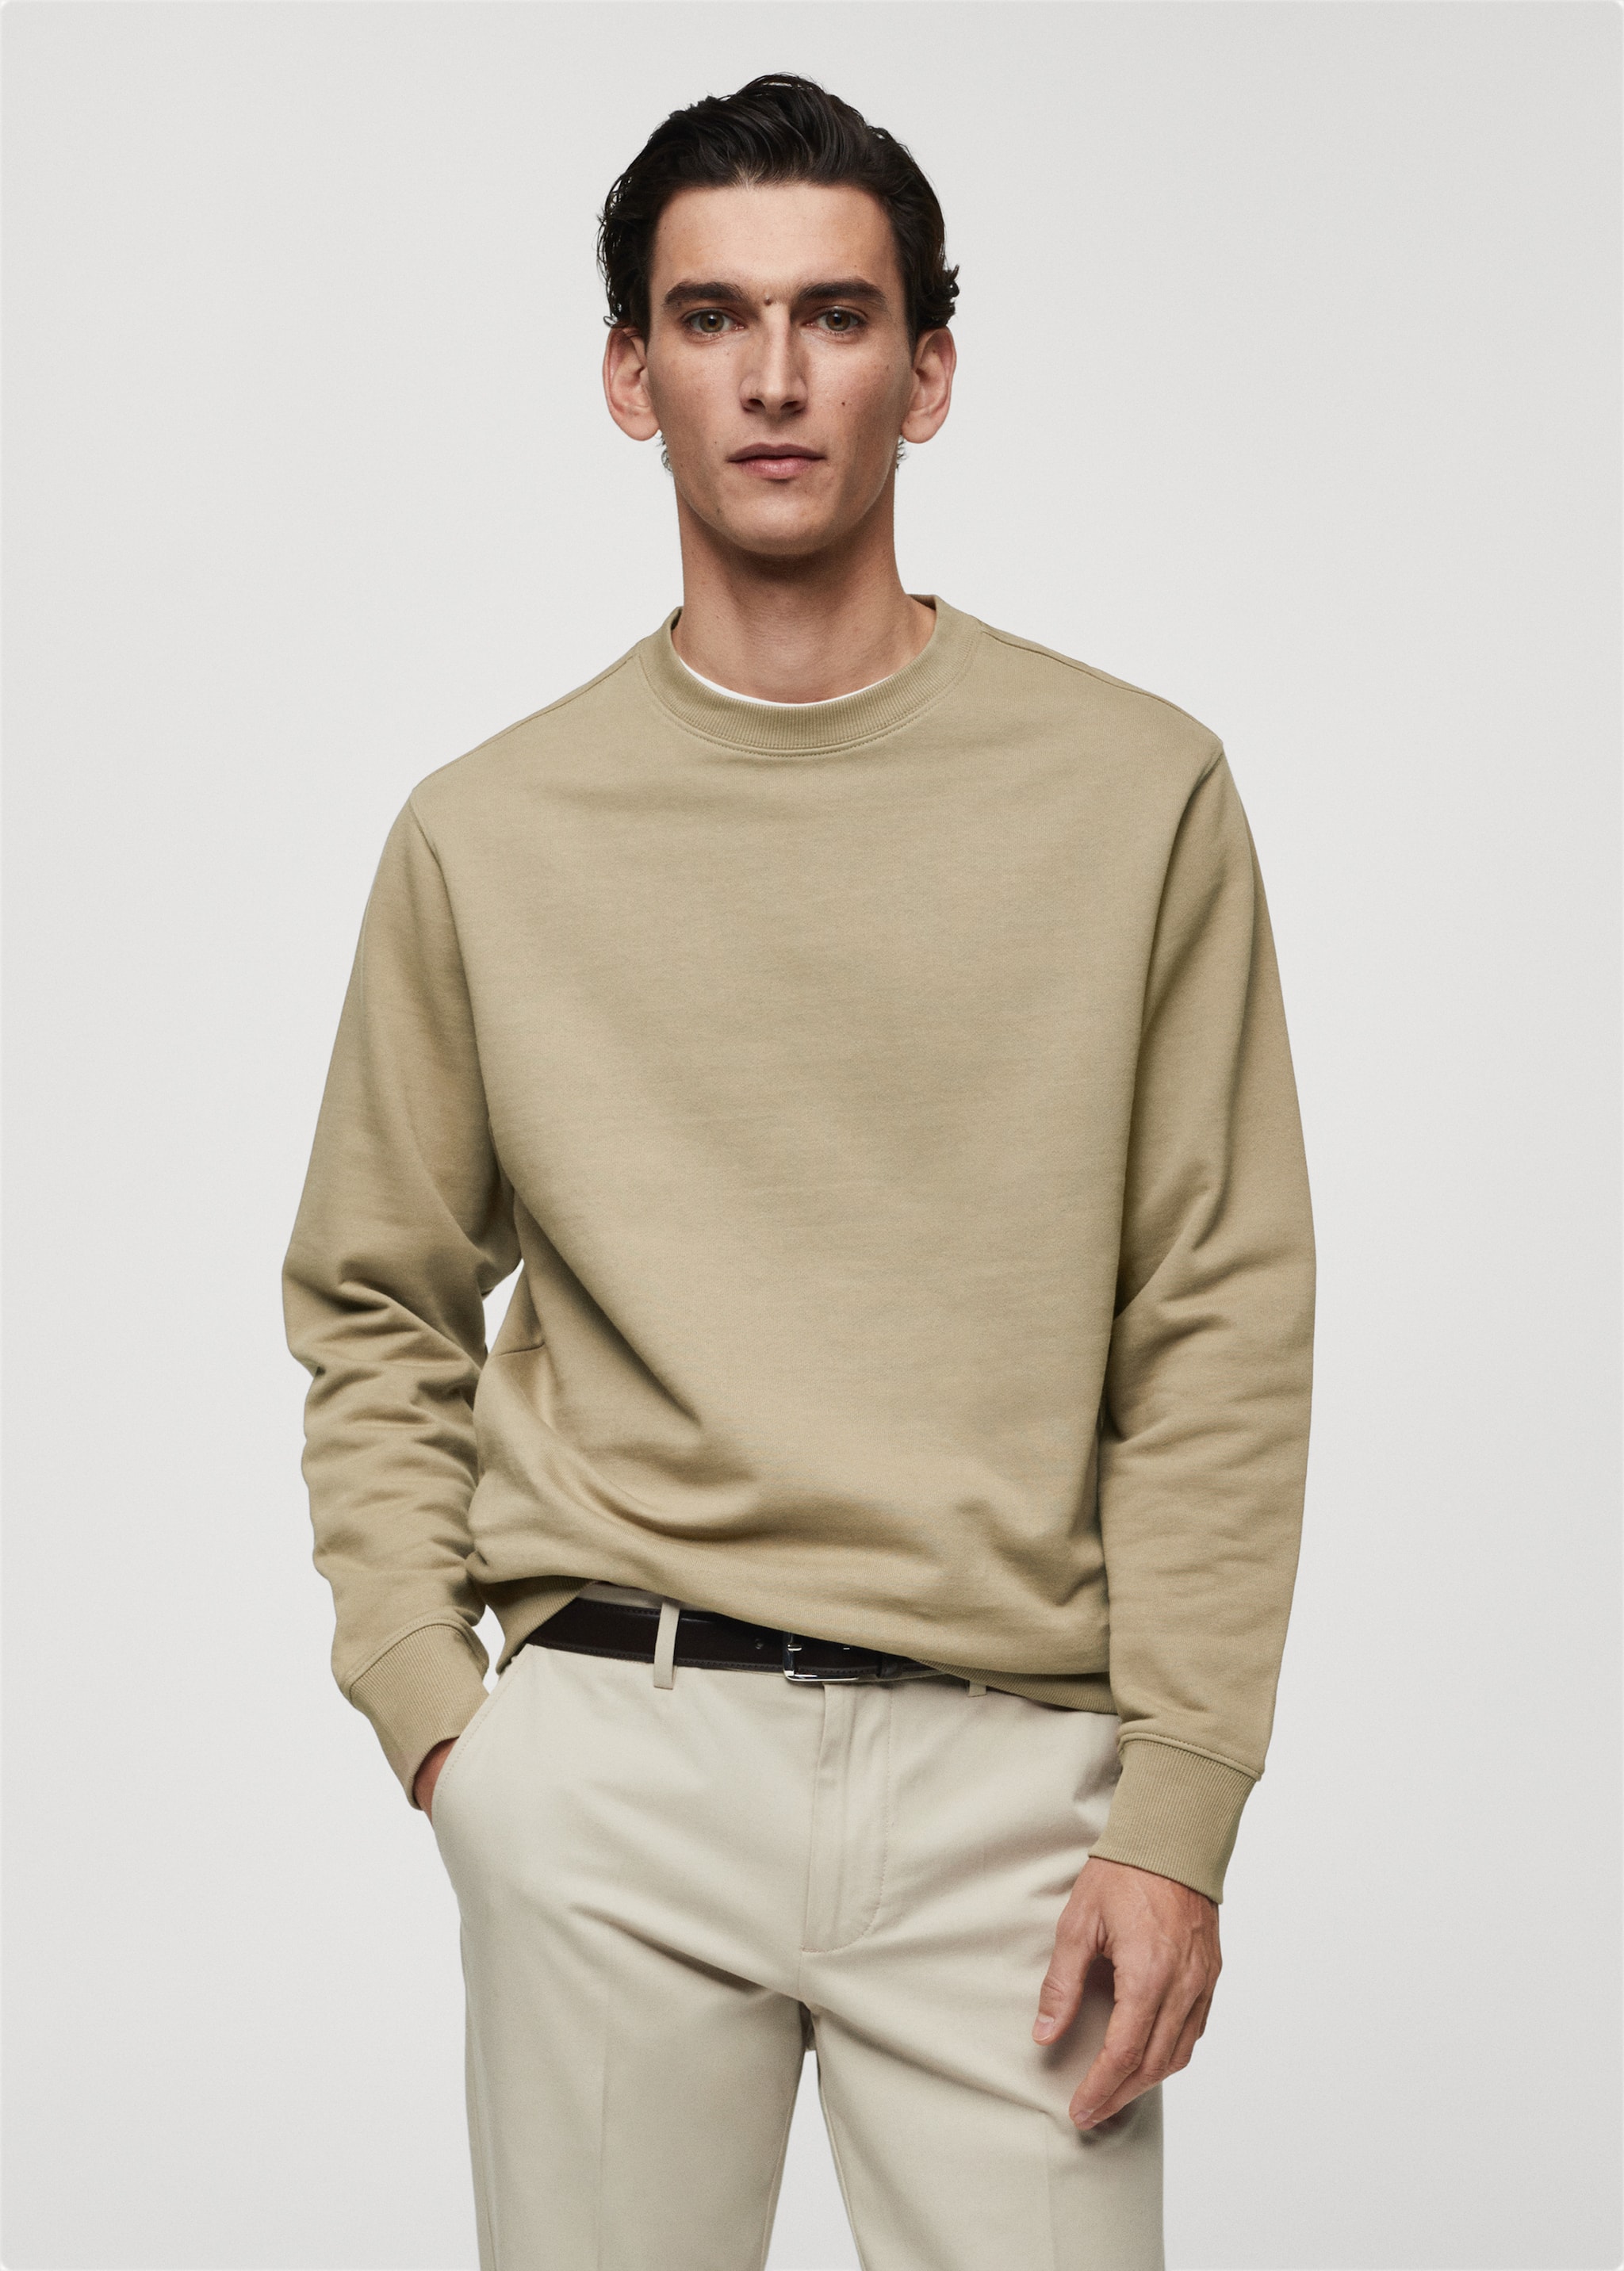 100% cotton basic sweatshirt  - Medium plane